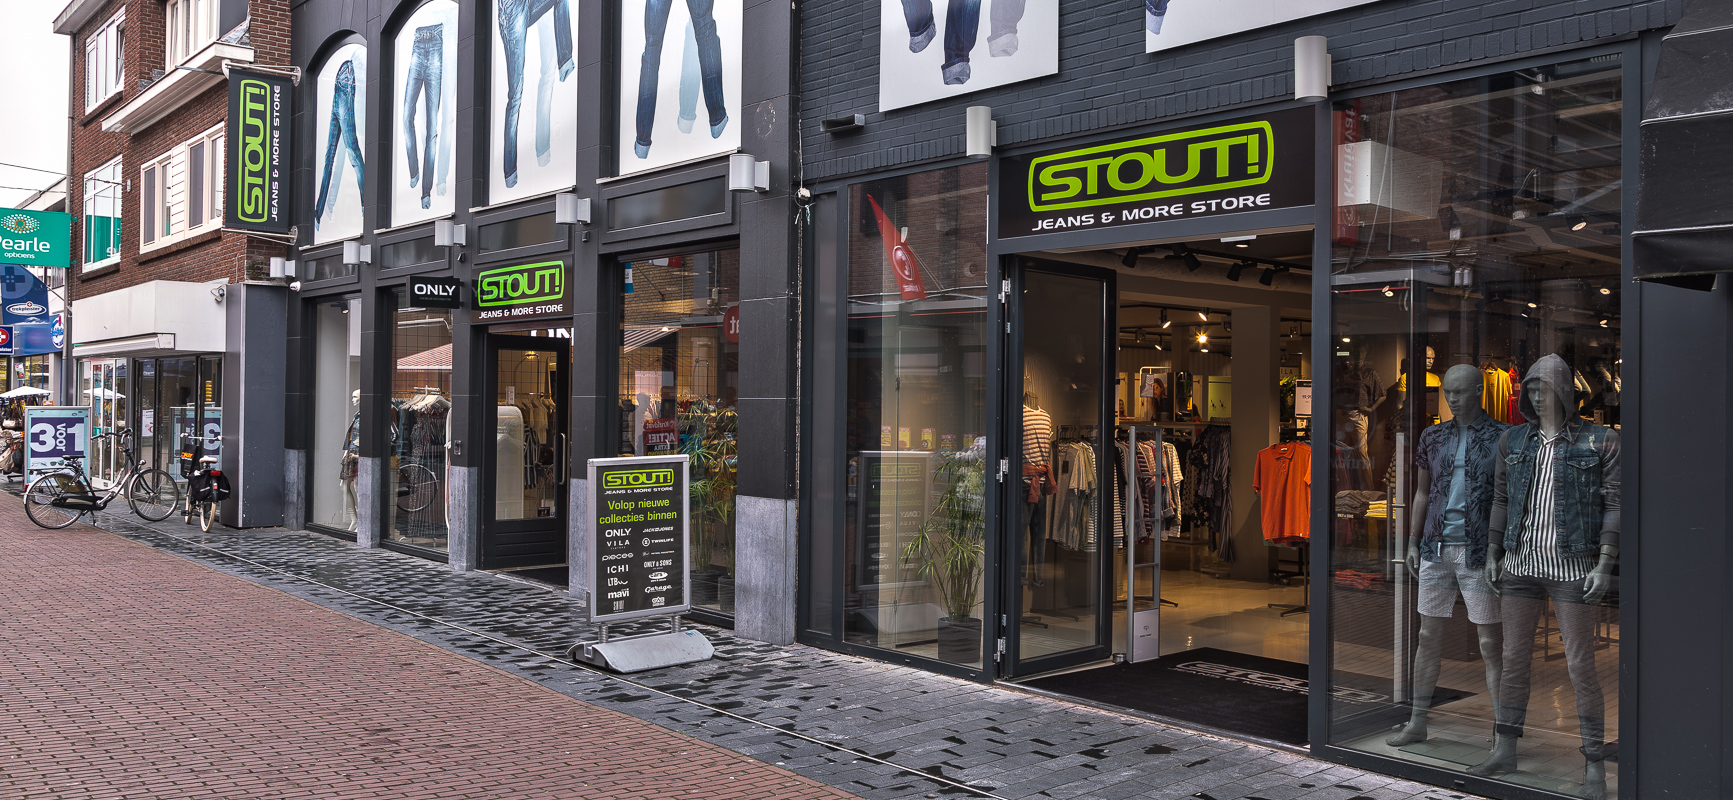 Stout Jeans | Raalte (NL) - Mode